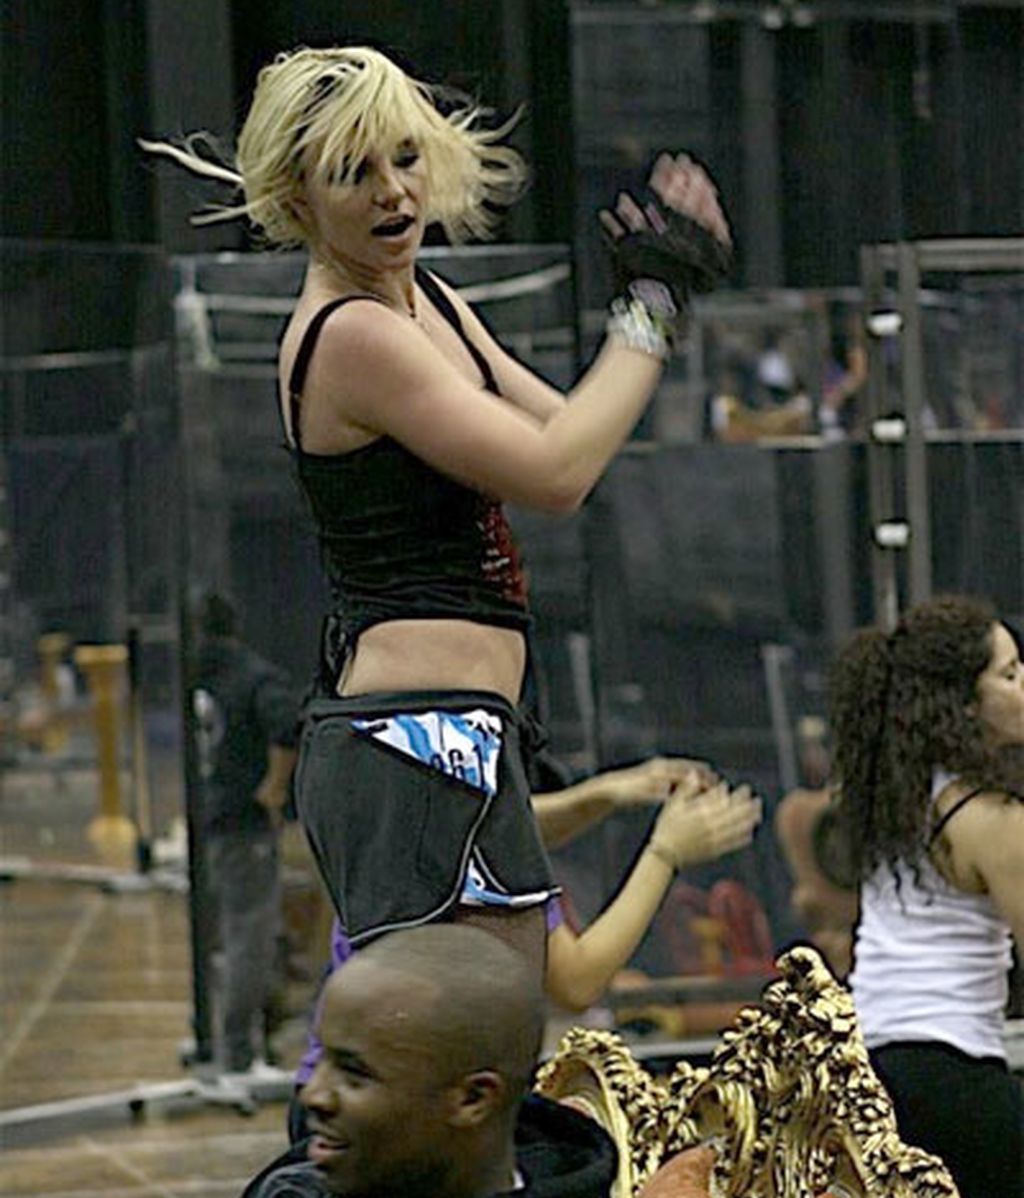 Britney Spears preprara su gira